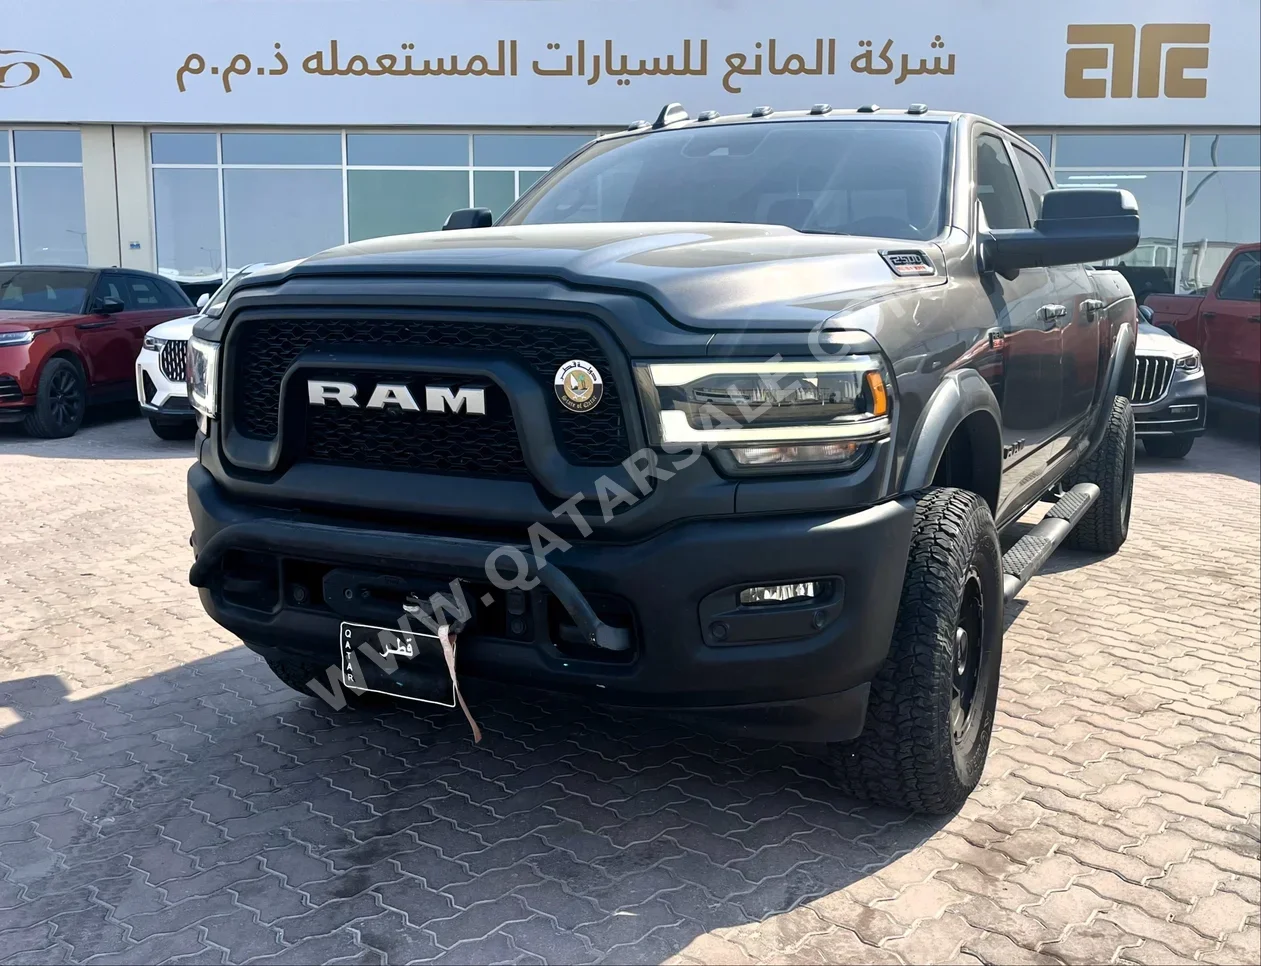 Dodge  Ram  2500 Power Wagon  2020  Automatic  80,000 Km  8 Cylinder  Four Wheel Drive (4WD)  Pick Up  Black  With Warranty